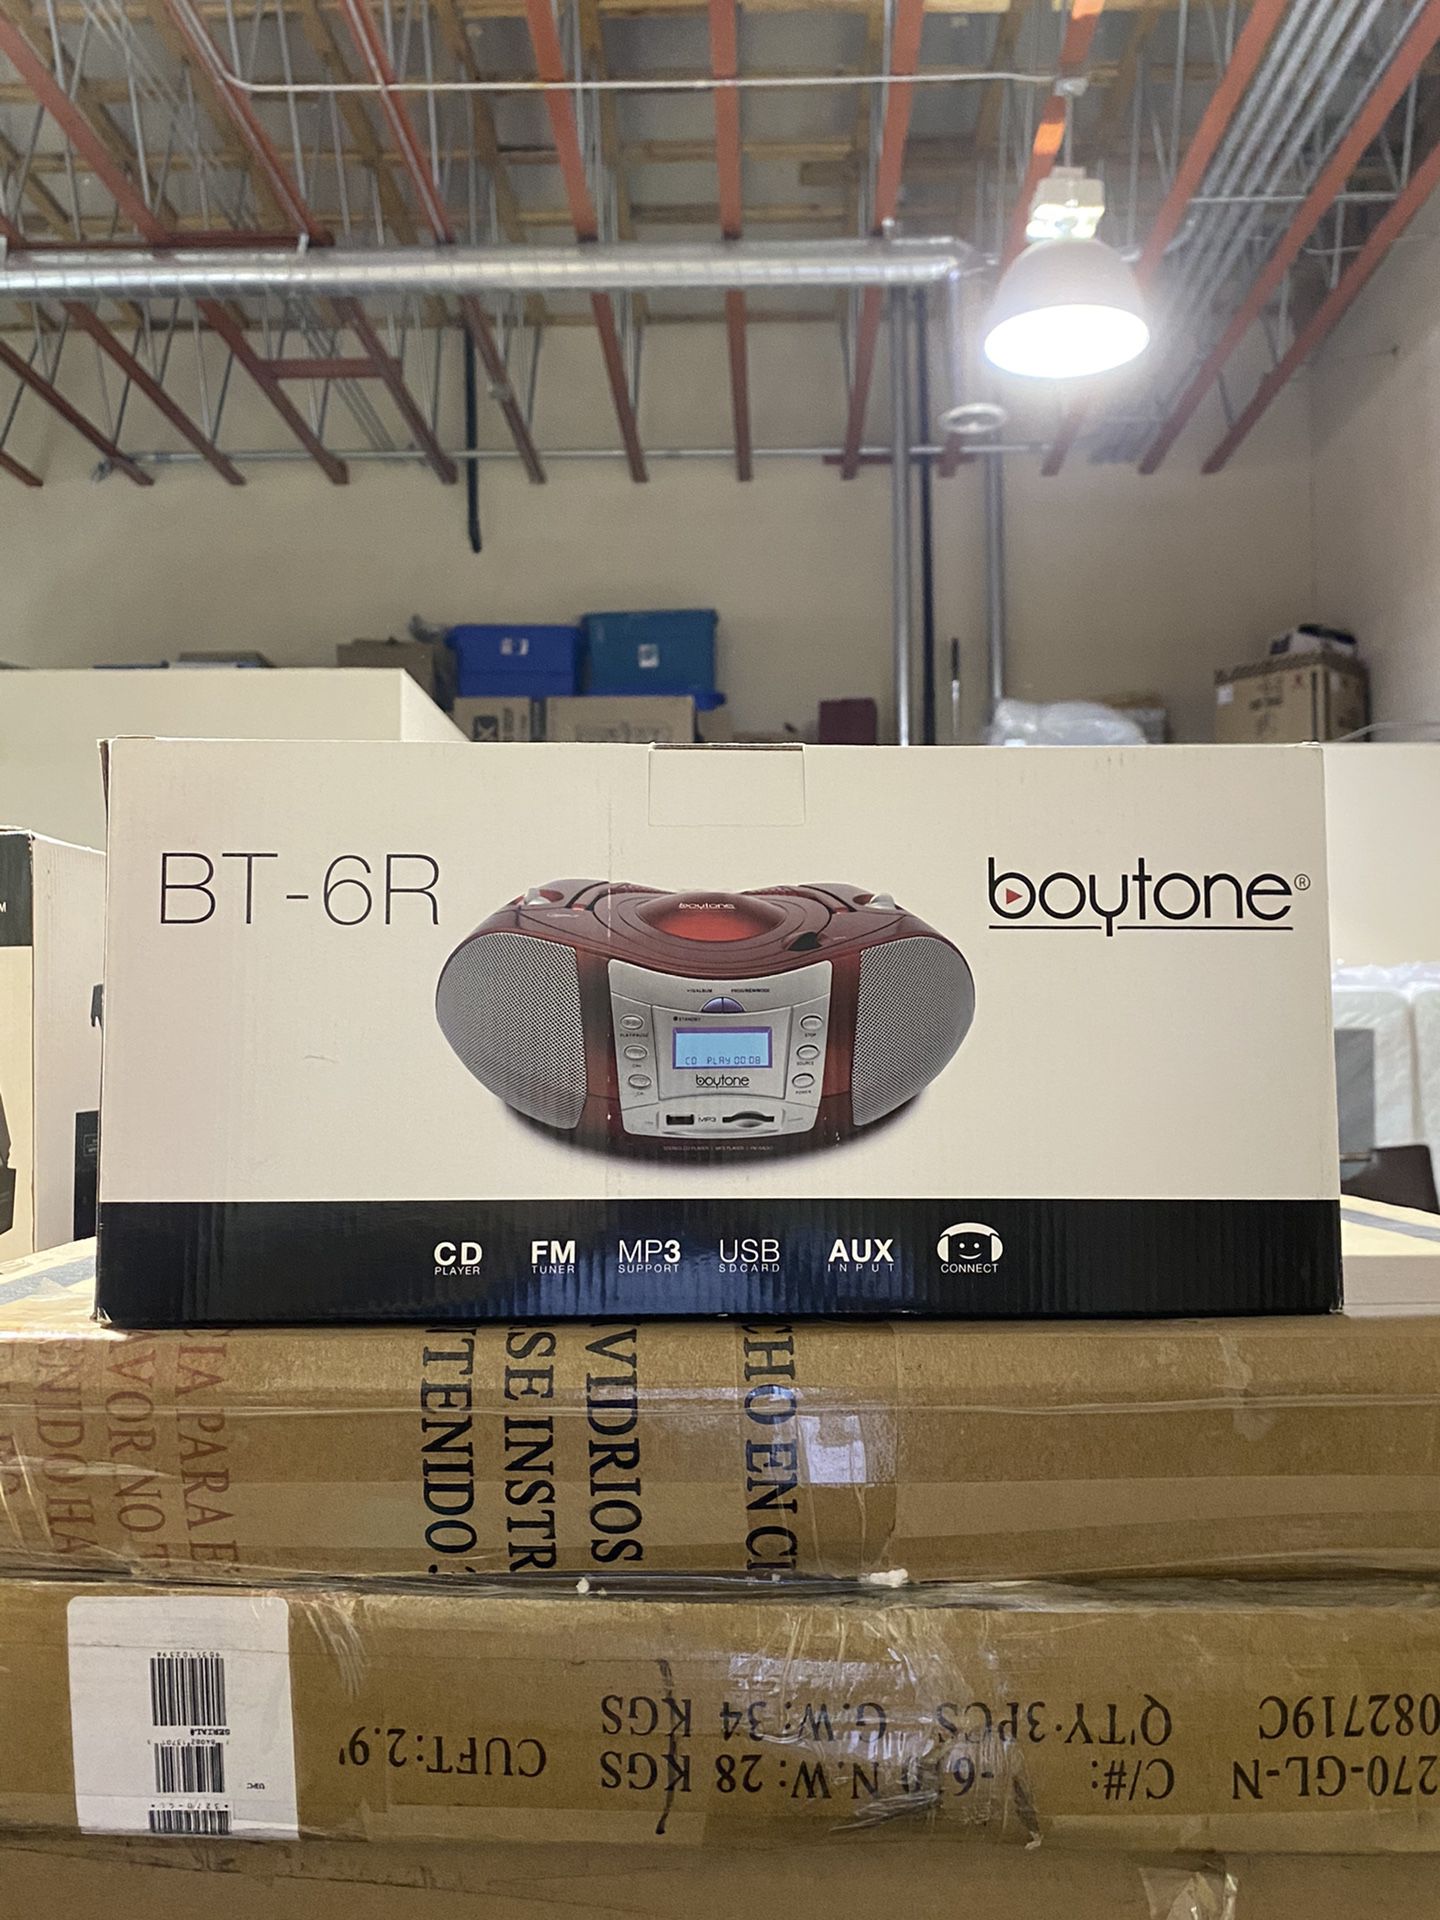 Boytone Stereo Speaker System Brand New but Open Box Displayed